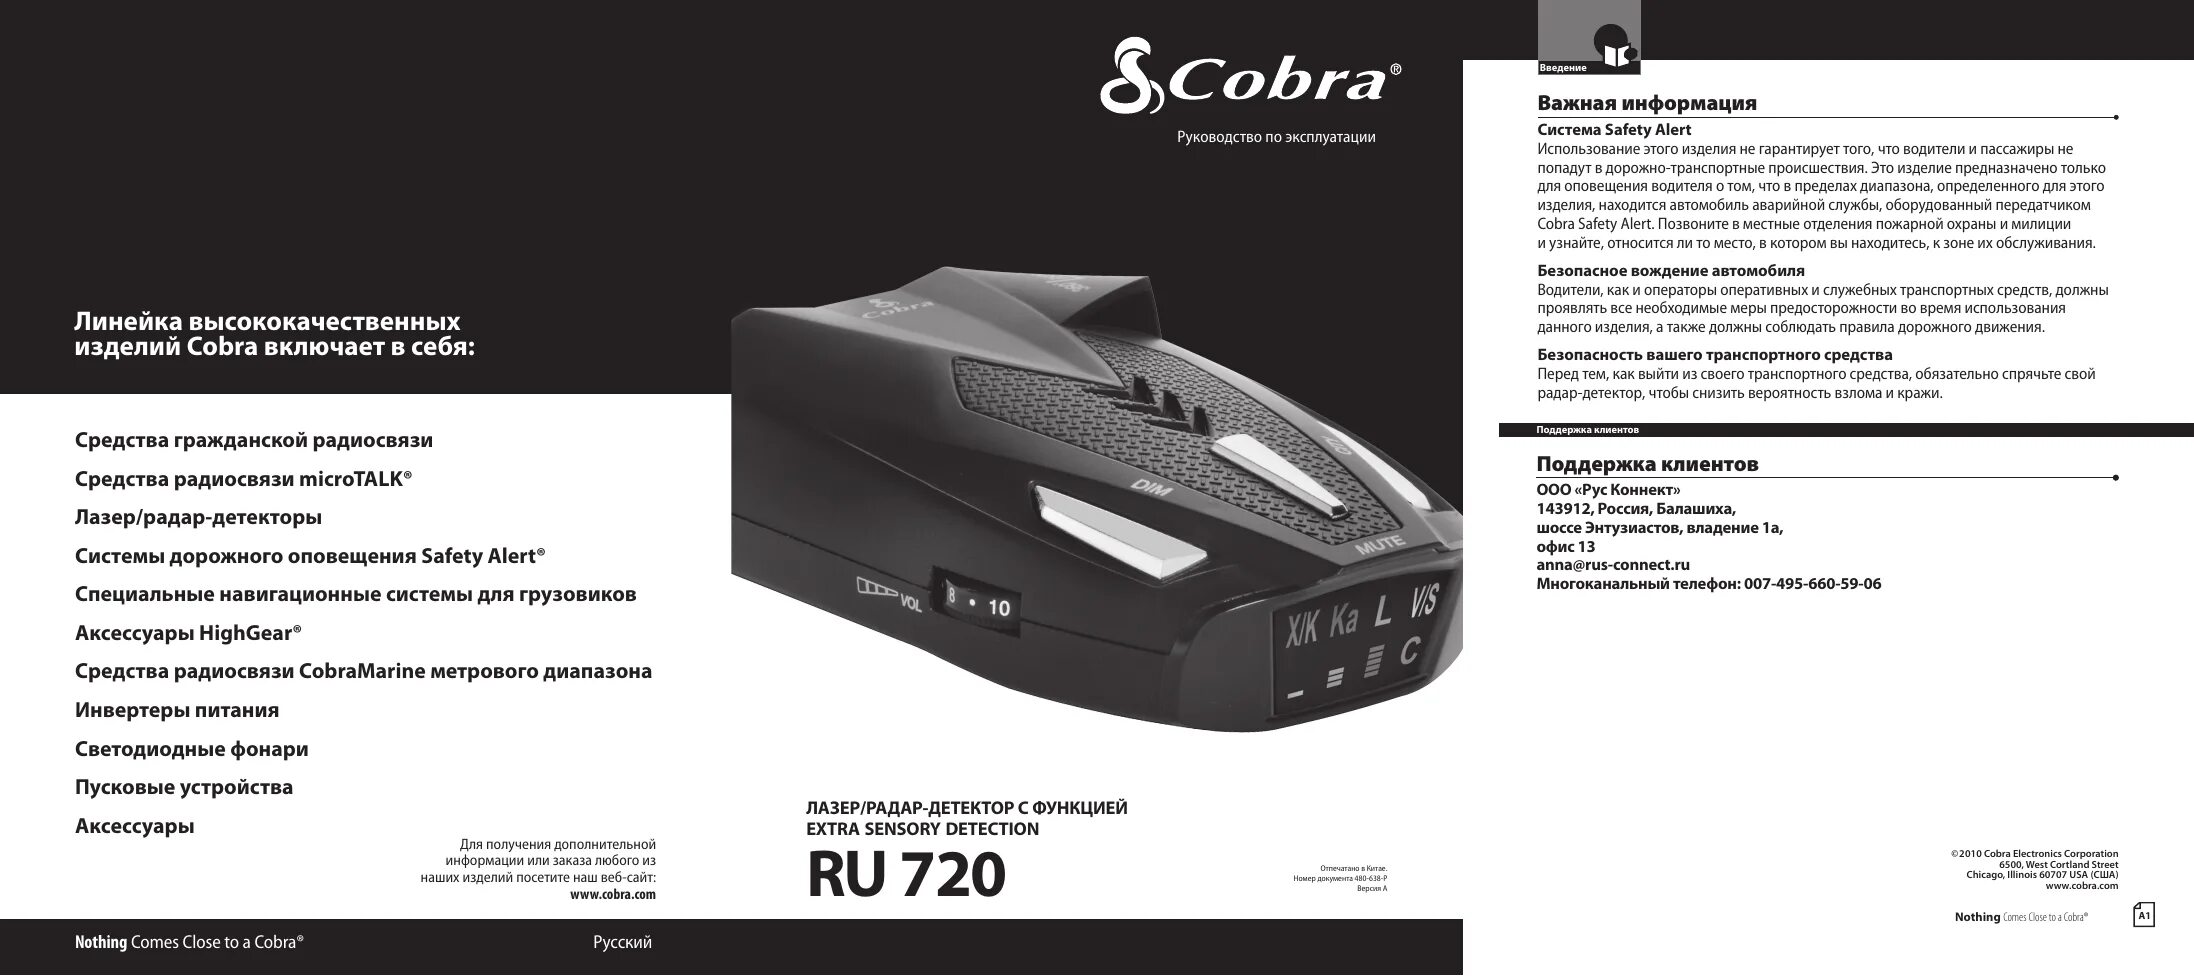 Настройка cobra. Ru 850 Cobra антирадар. Антирадар Кобра электроник инструкция. Старый родар детектор Кобра с экраном Комби характеристики. Cobra MICROTALK PMR 300.